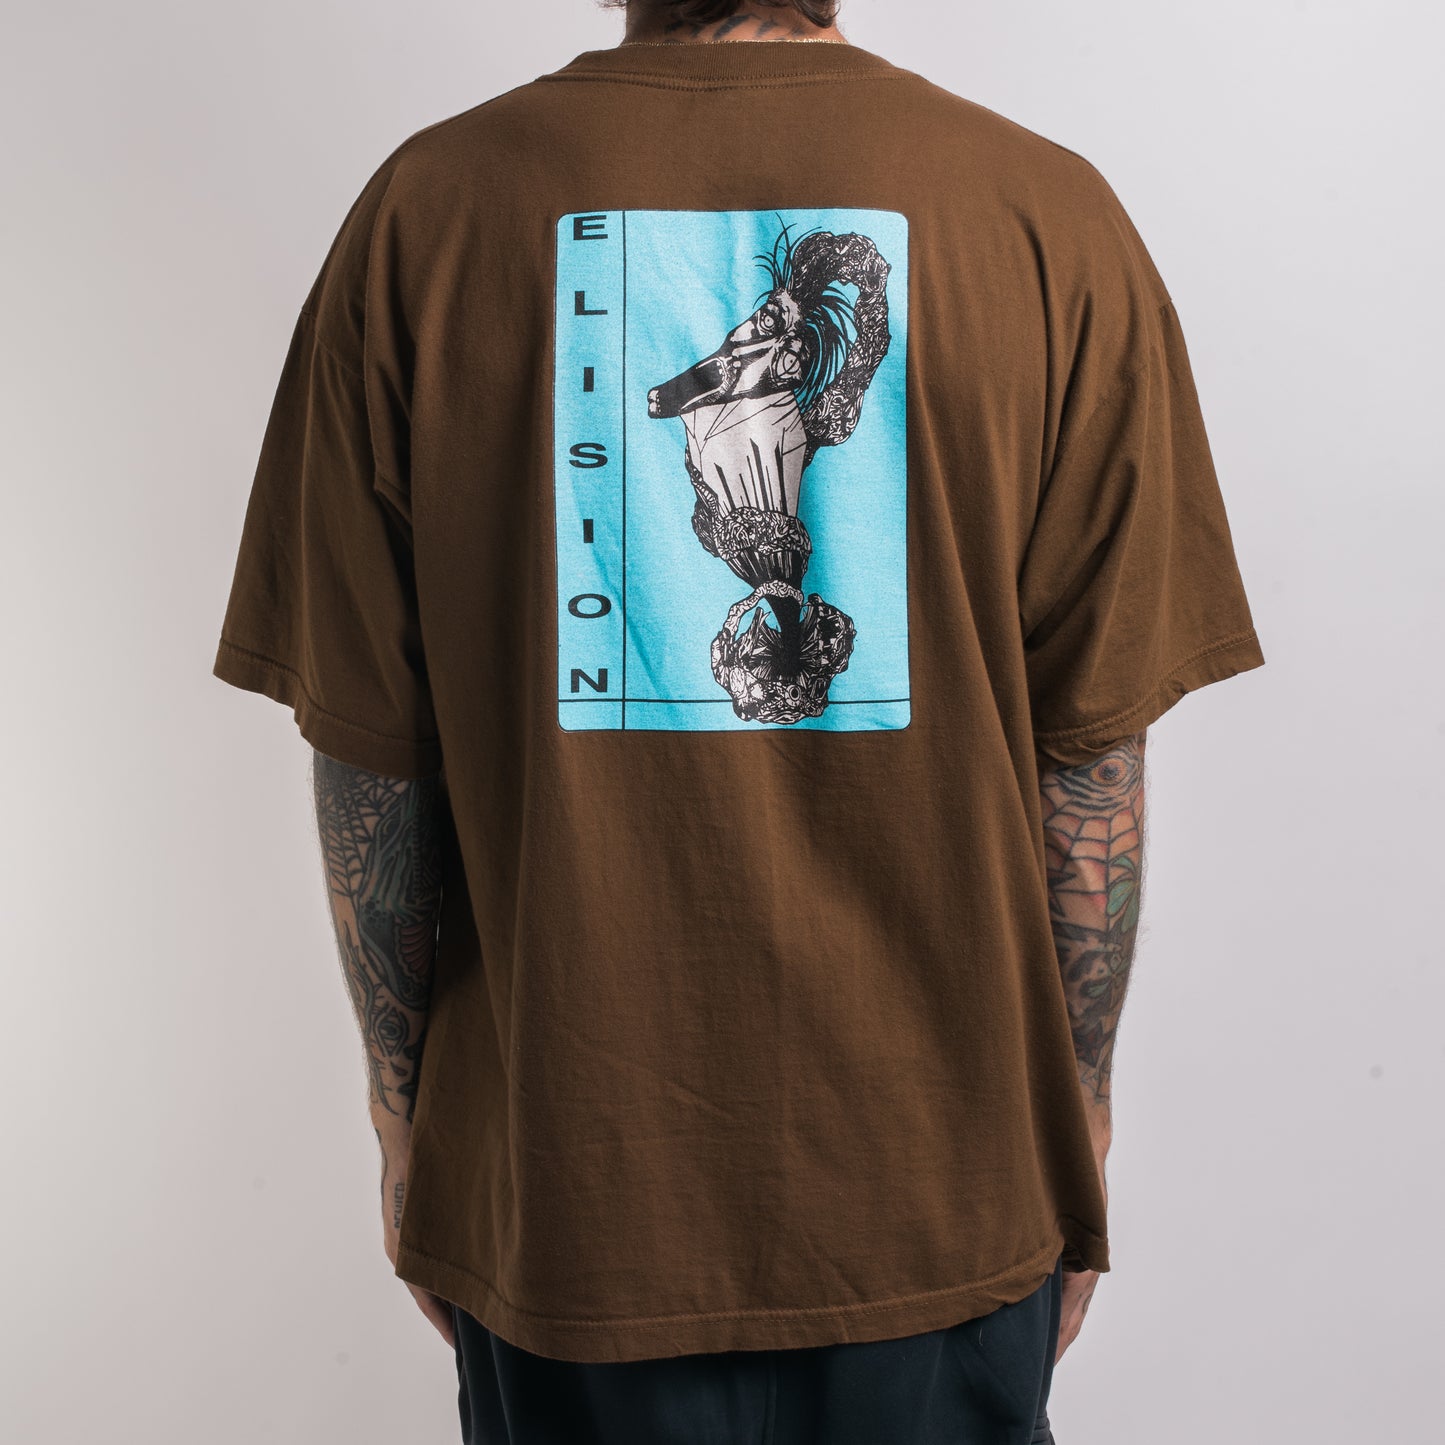 Vintage 90’s Elision T-Shirt